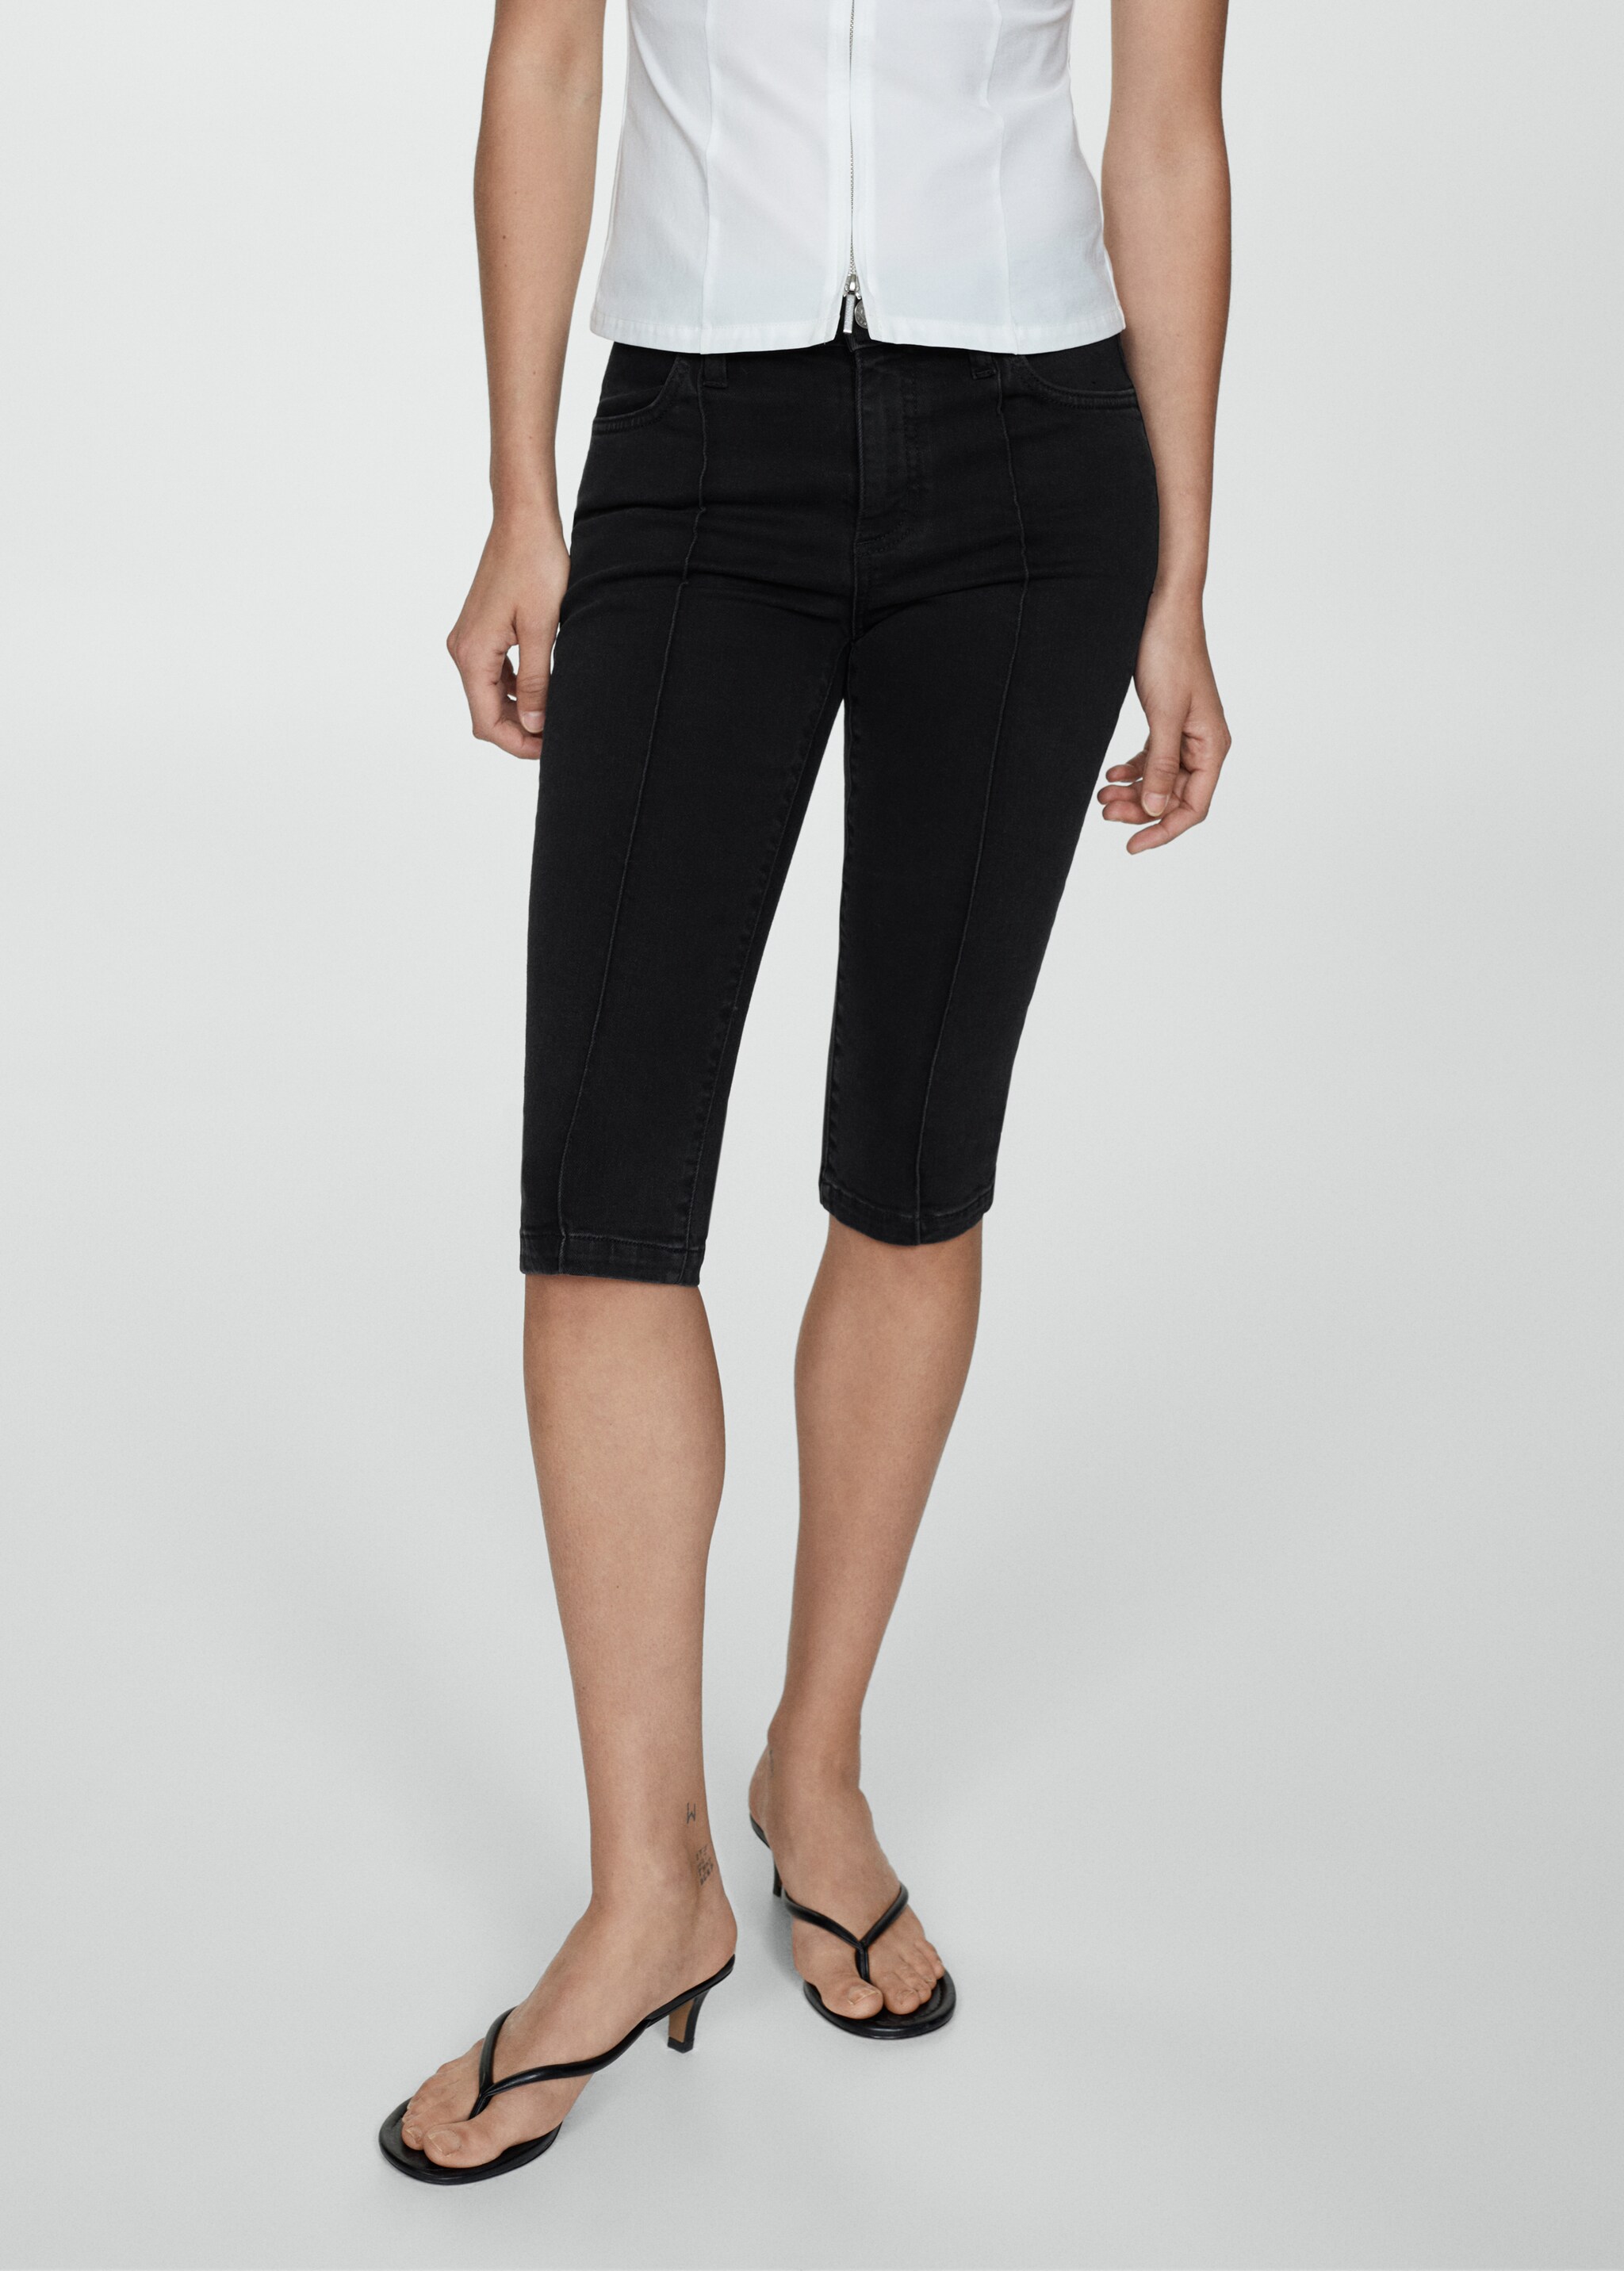 Slim capri jeans with decorative stitching - Medium plane